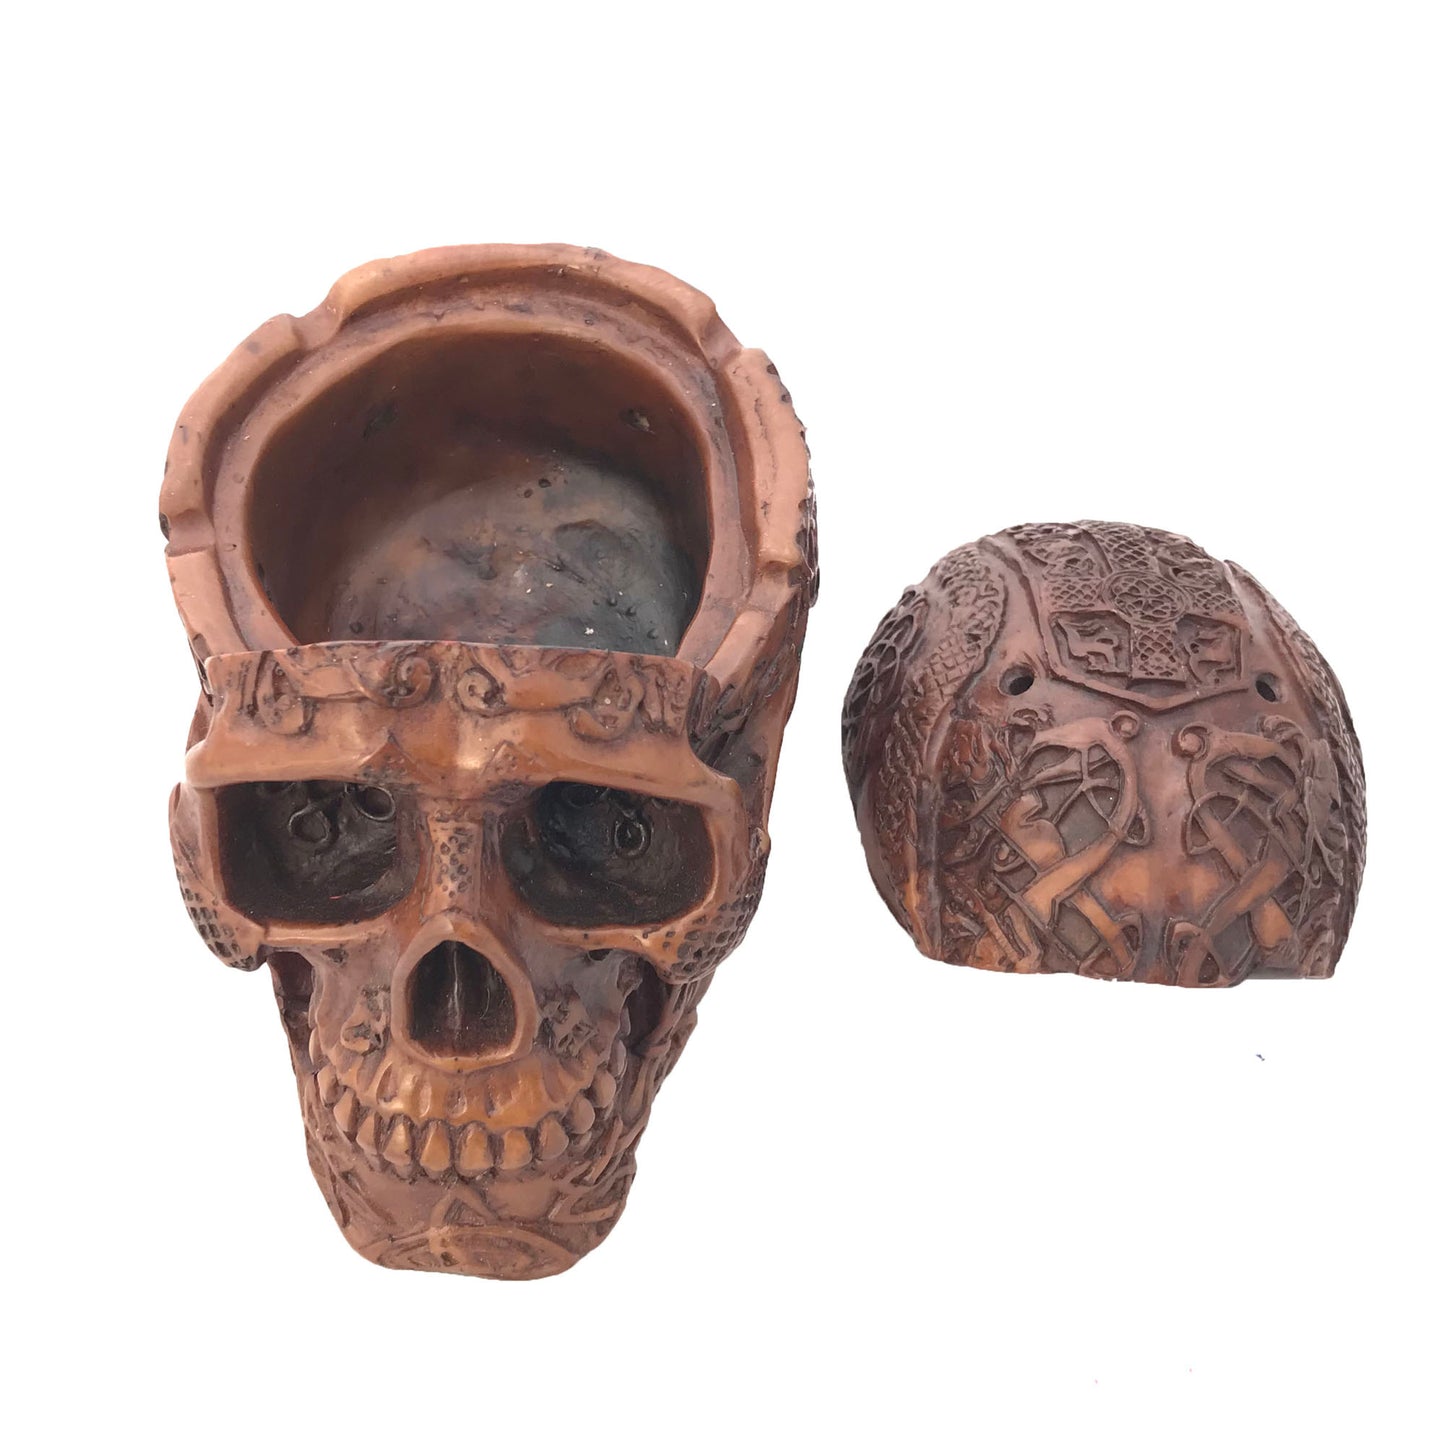 Skull Ashtray made from resin